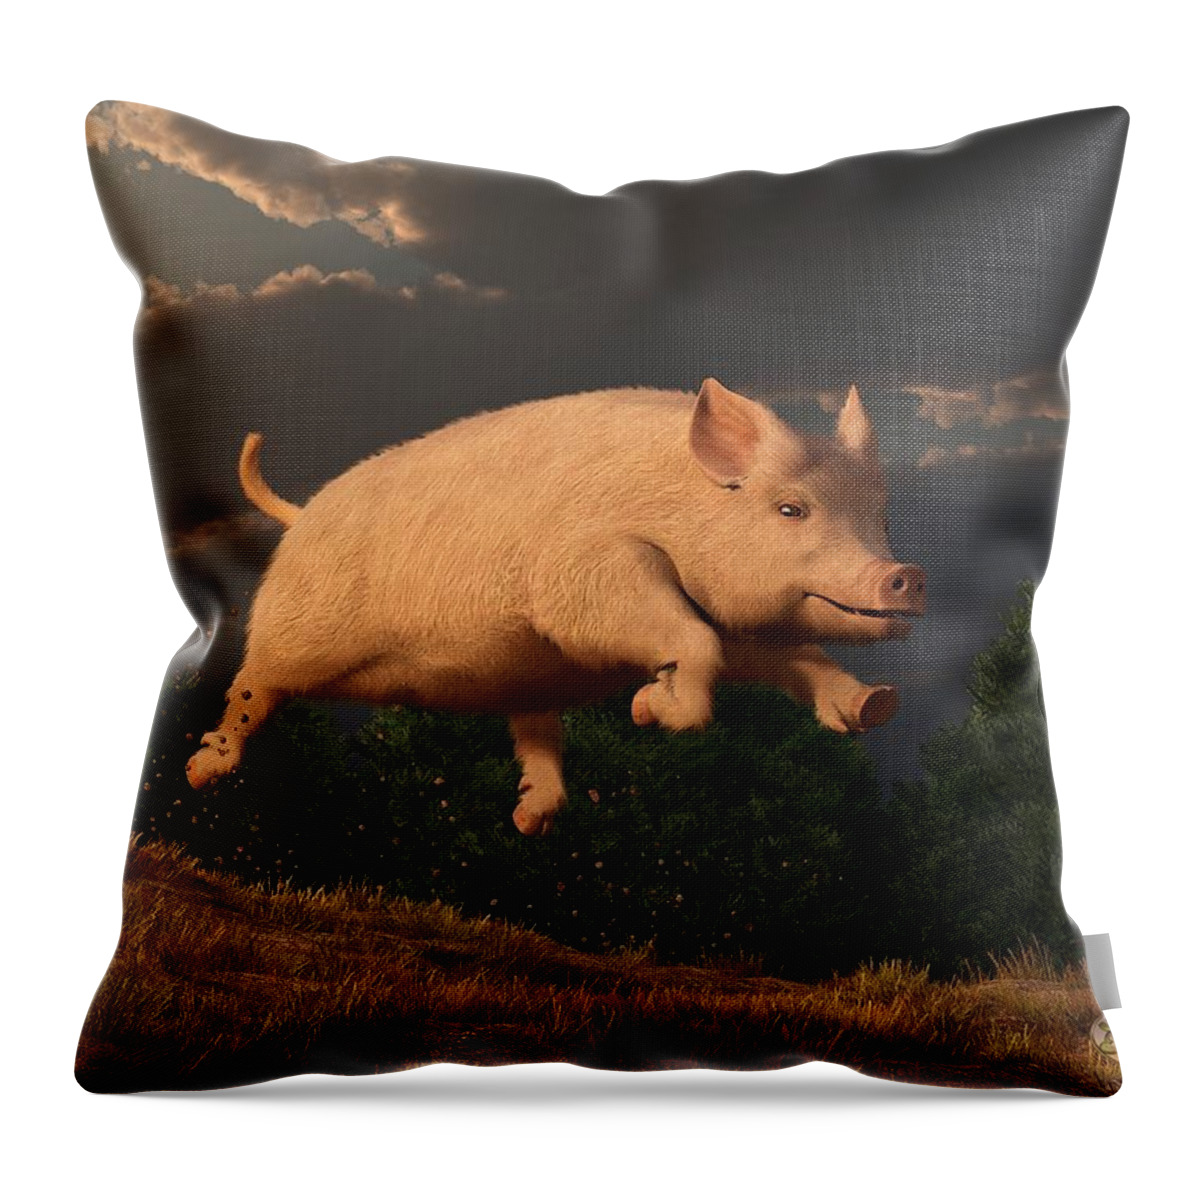 Pig Throw Pillow featuring the digital art Racing Pig by Daniel Eskridge